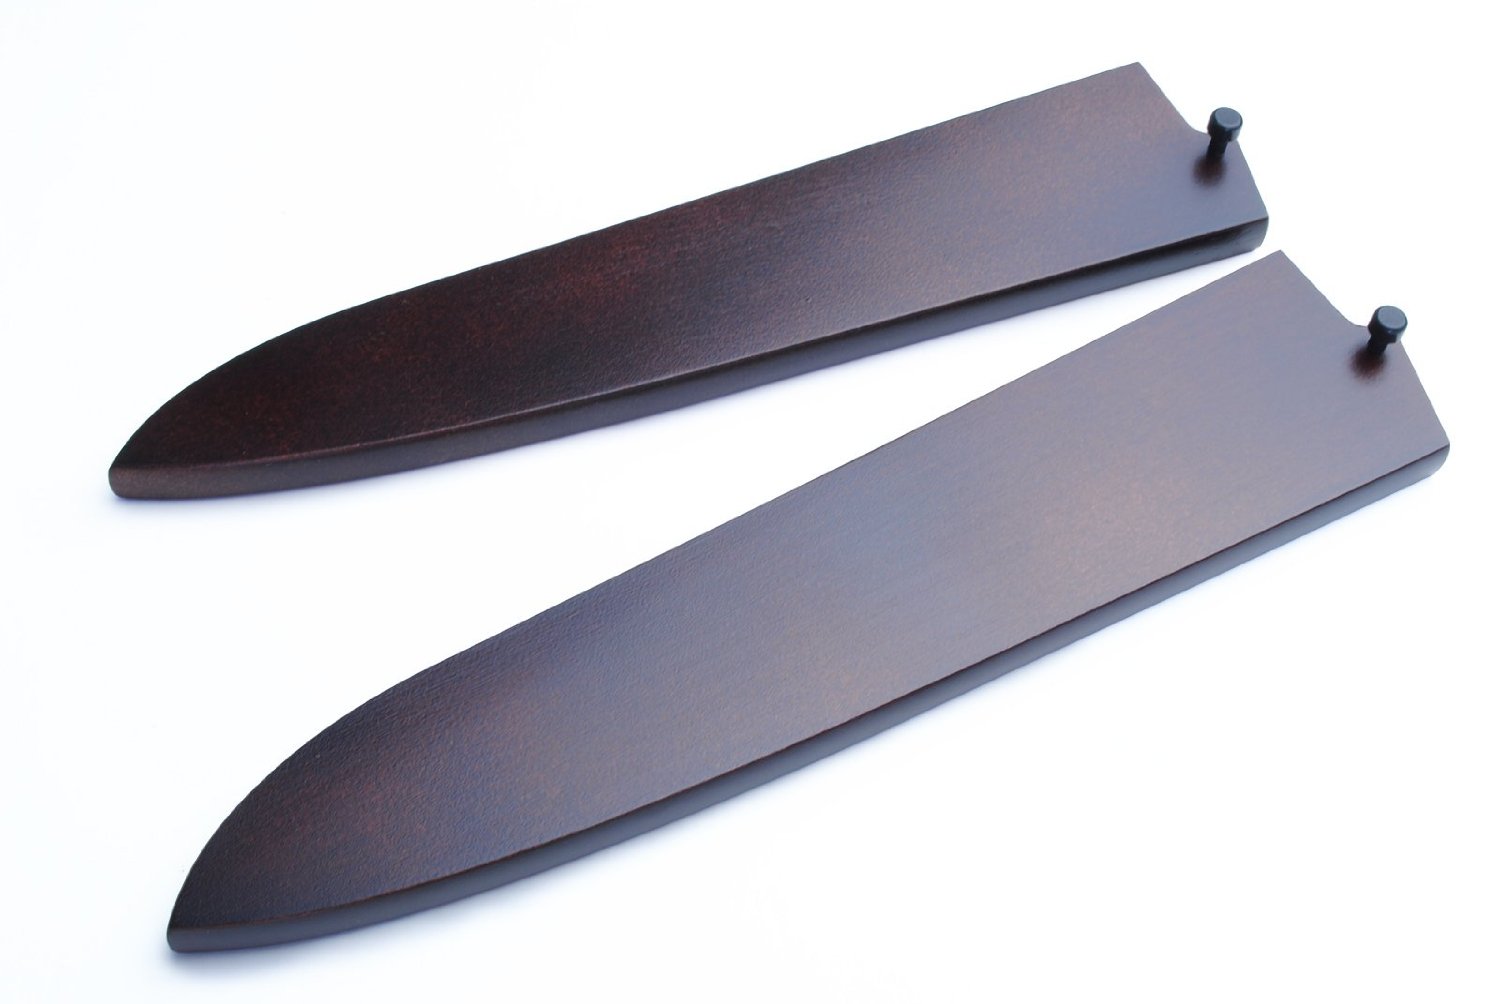 8 inch Chef Knife Blade Sheath Saya Tapered Guard Chef knife Case Cover Bag